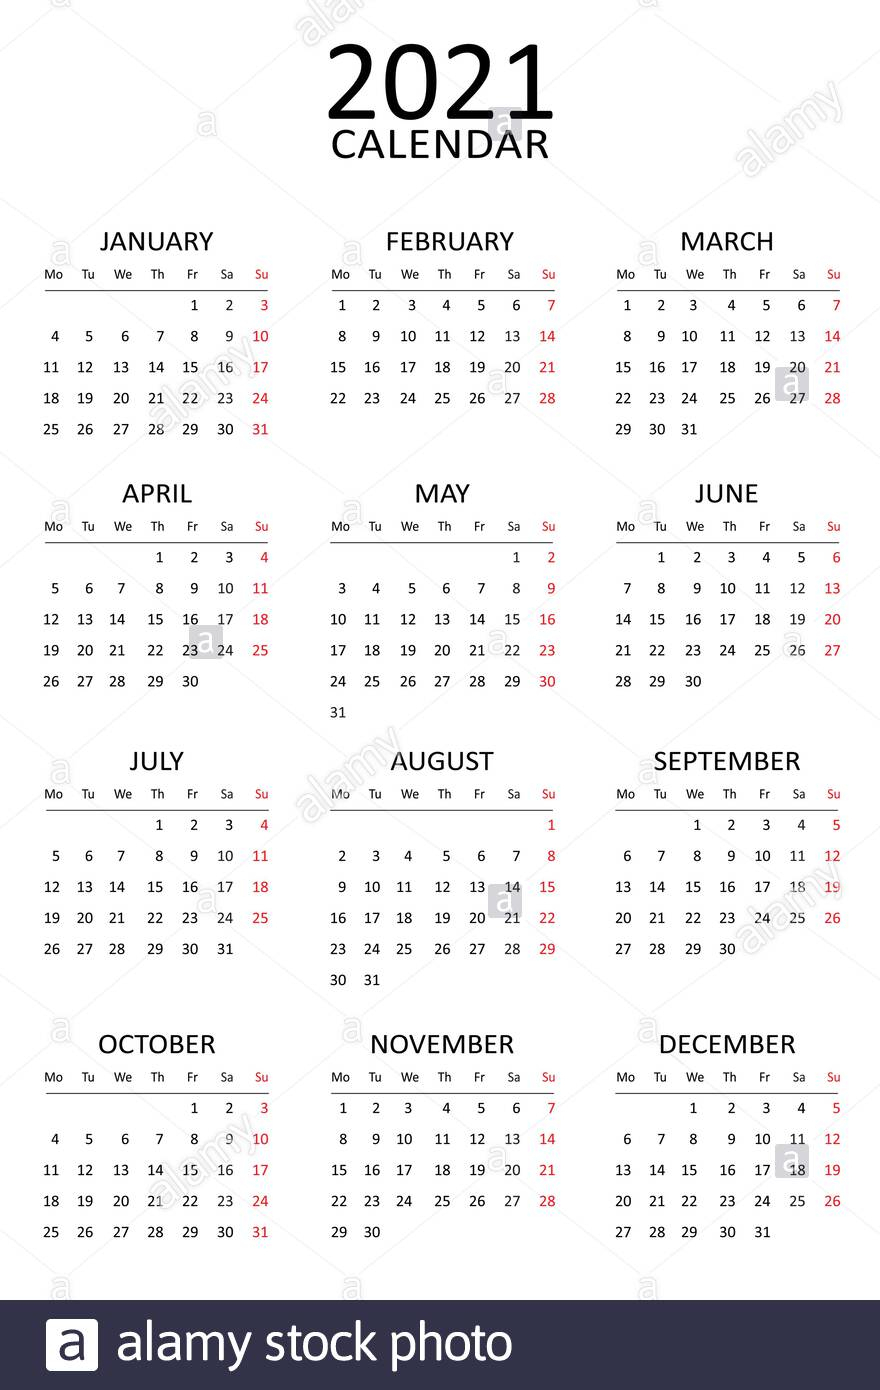 2021 Calendar Template. Simple Black And White Design. Week